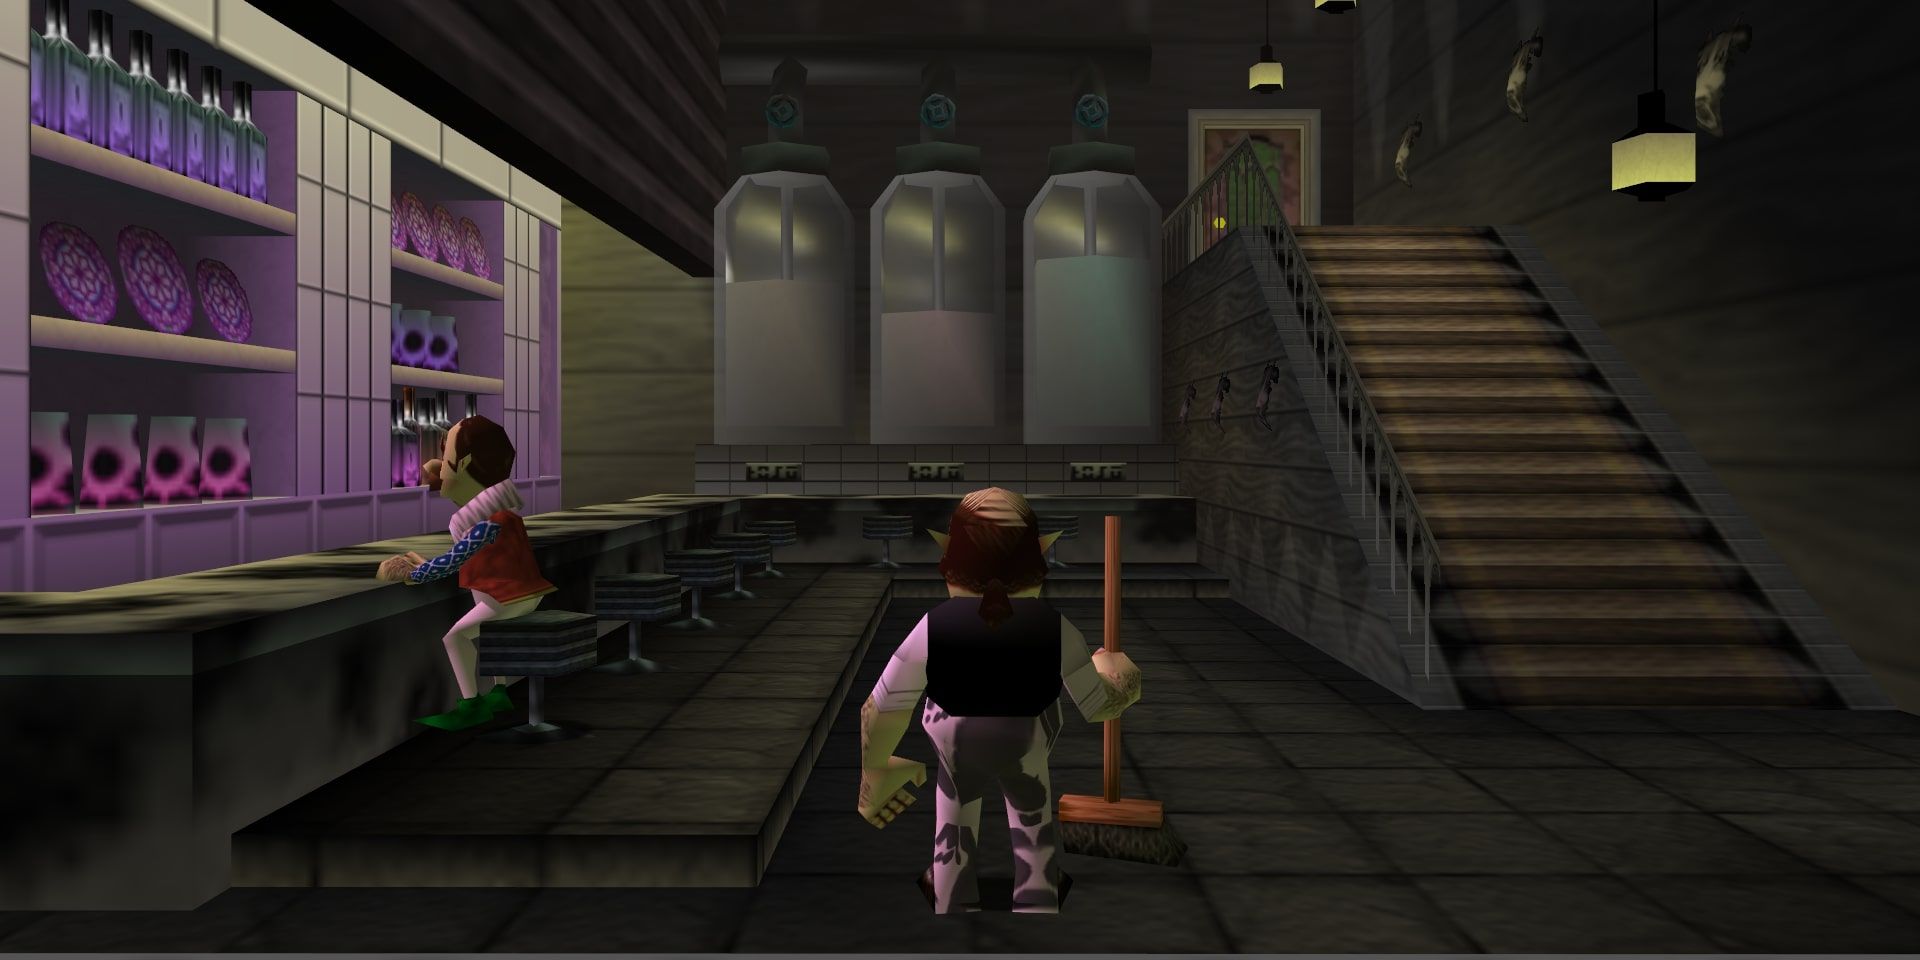 Milk Bar restaurant from The Legend of Zelda: Majora's Mask